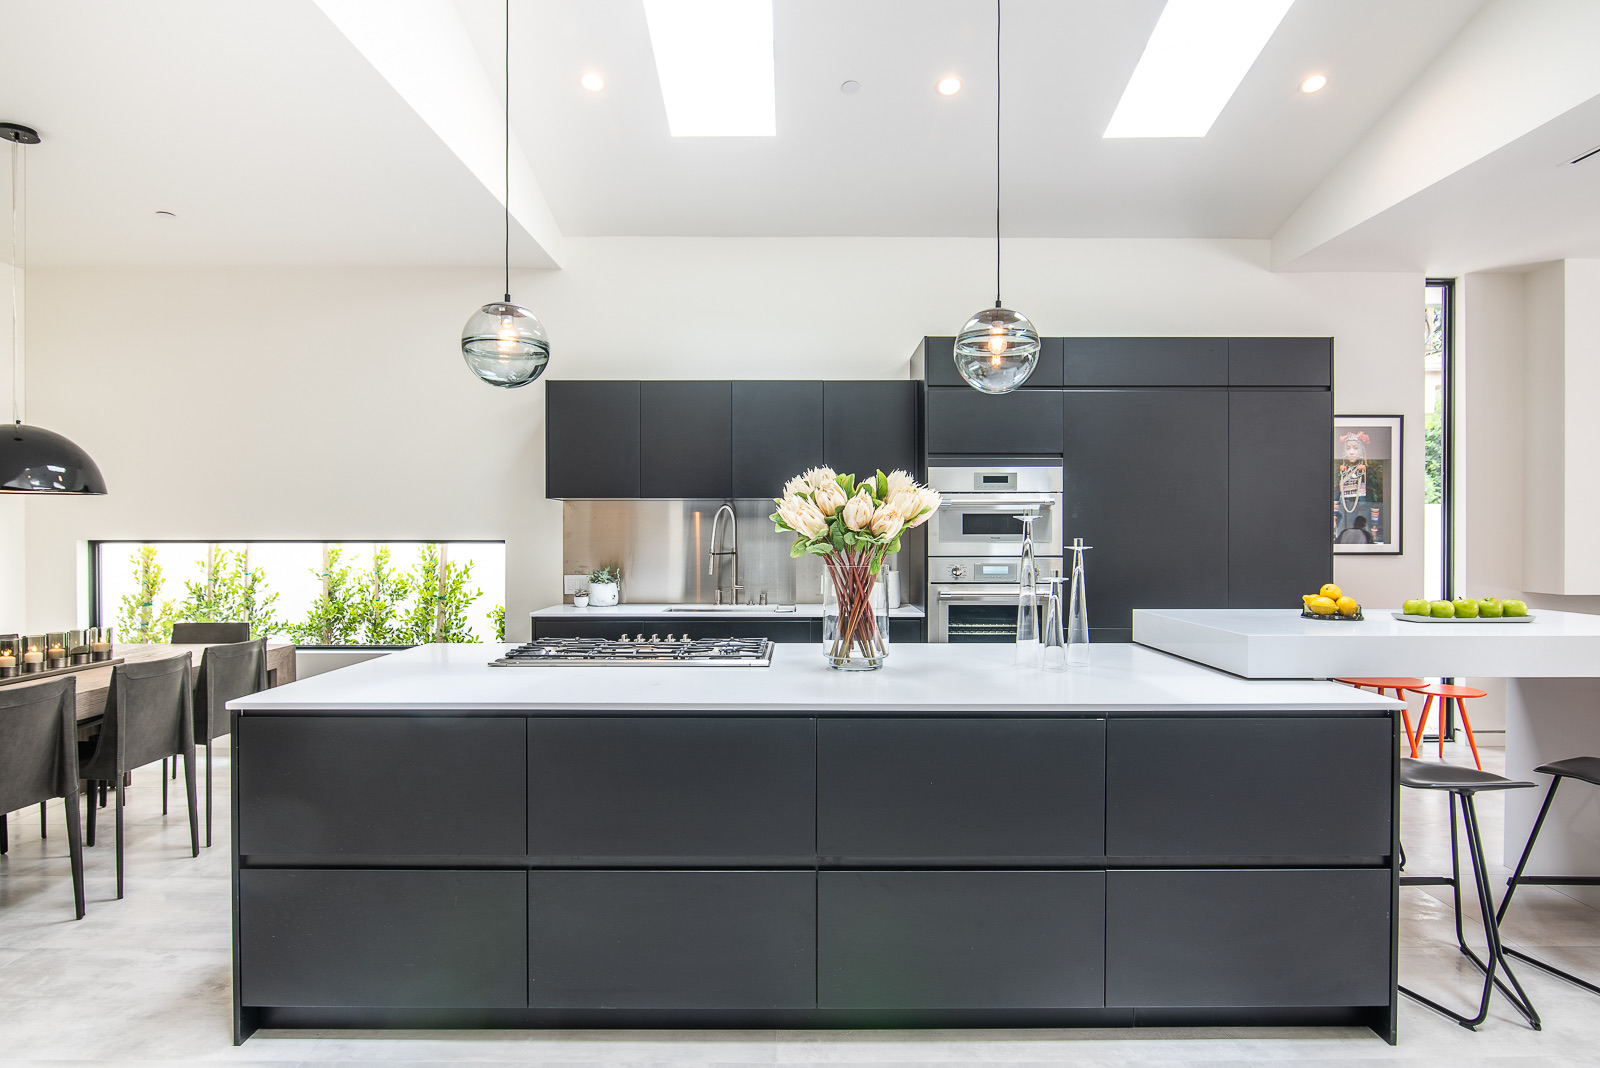 Inspirational kitchen designs | Ecay Design